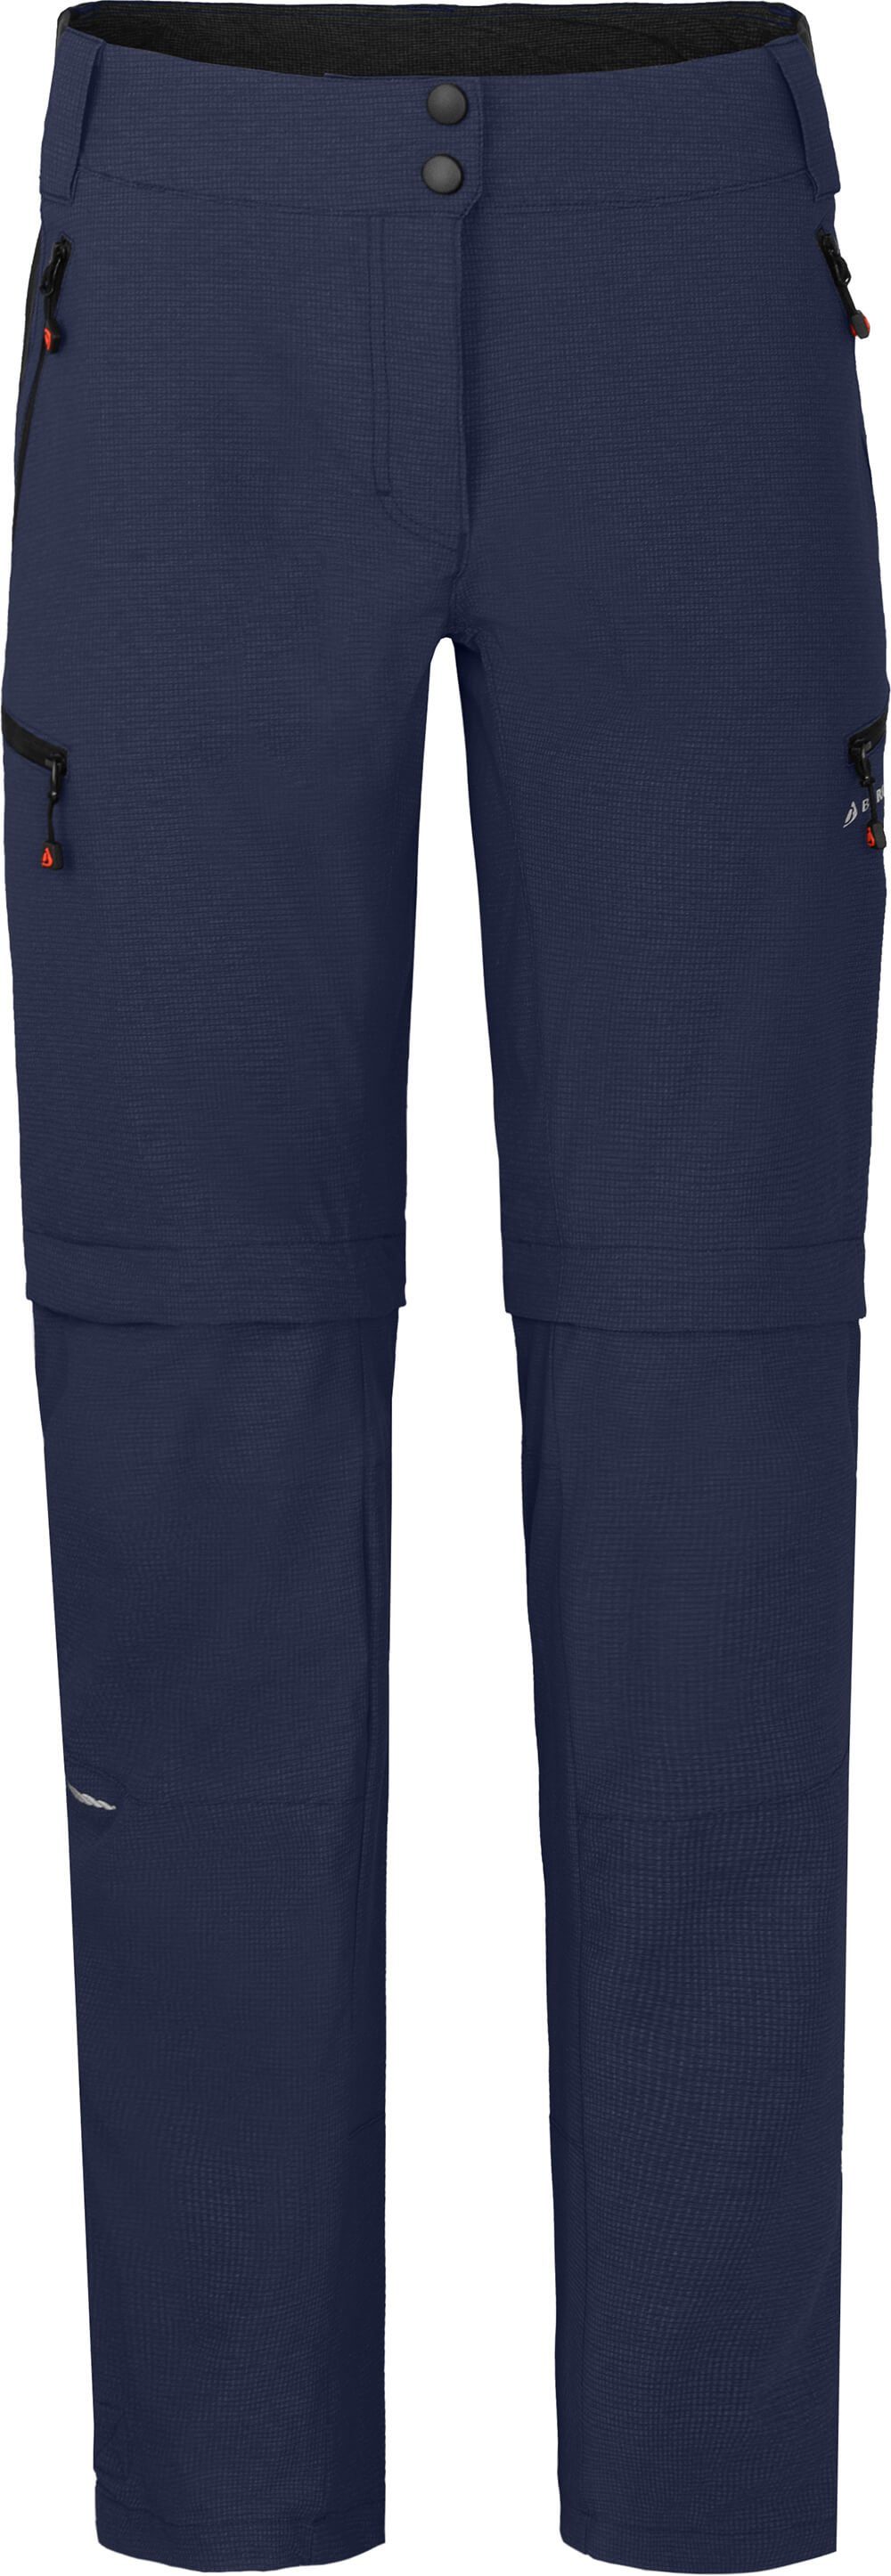 Bergson Zip-off-Hose VALLI zip-off Damen Radhose, robust elastisch, Kurzgrößen, peacoat blau